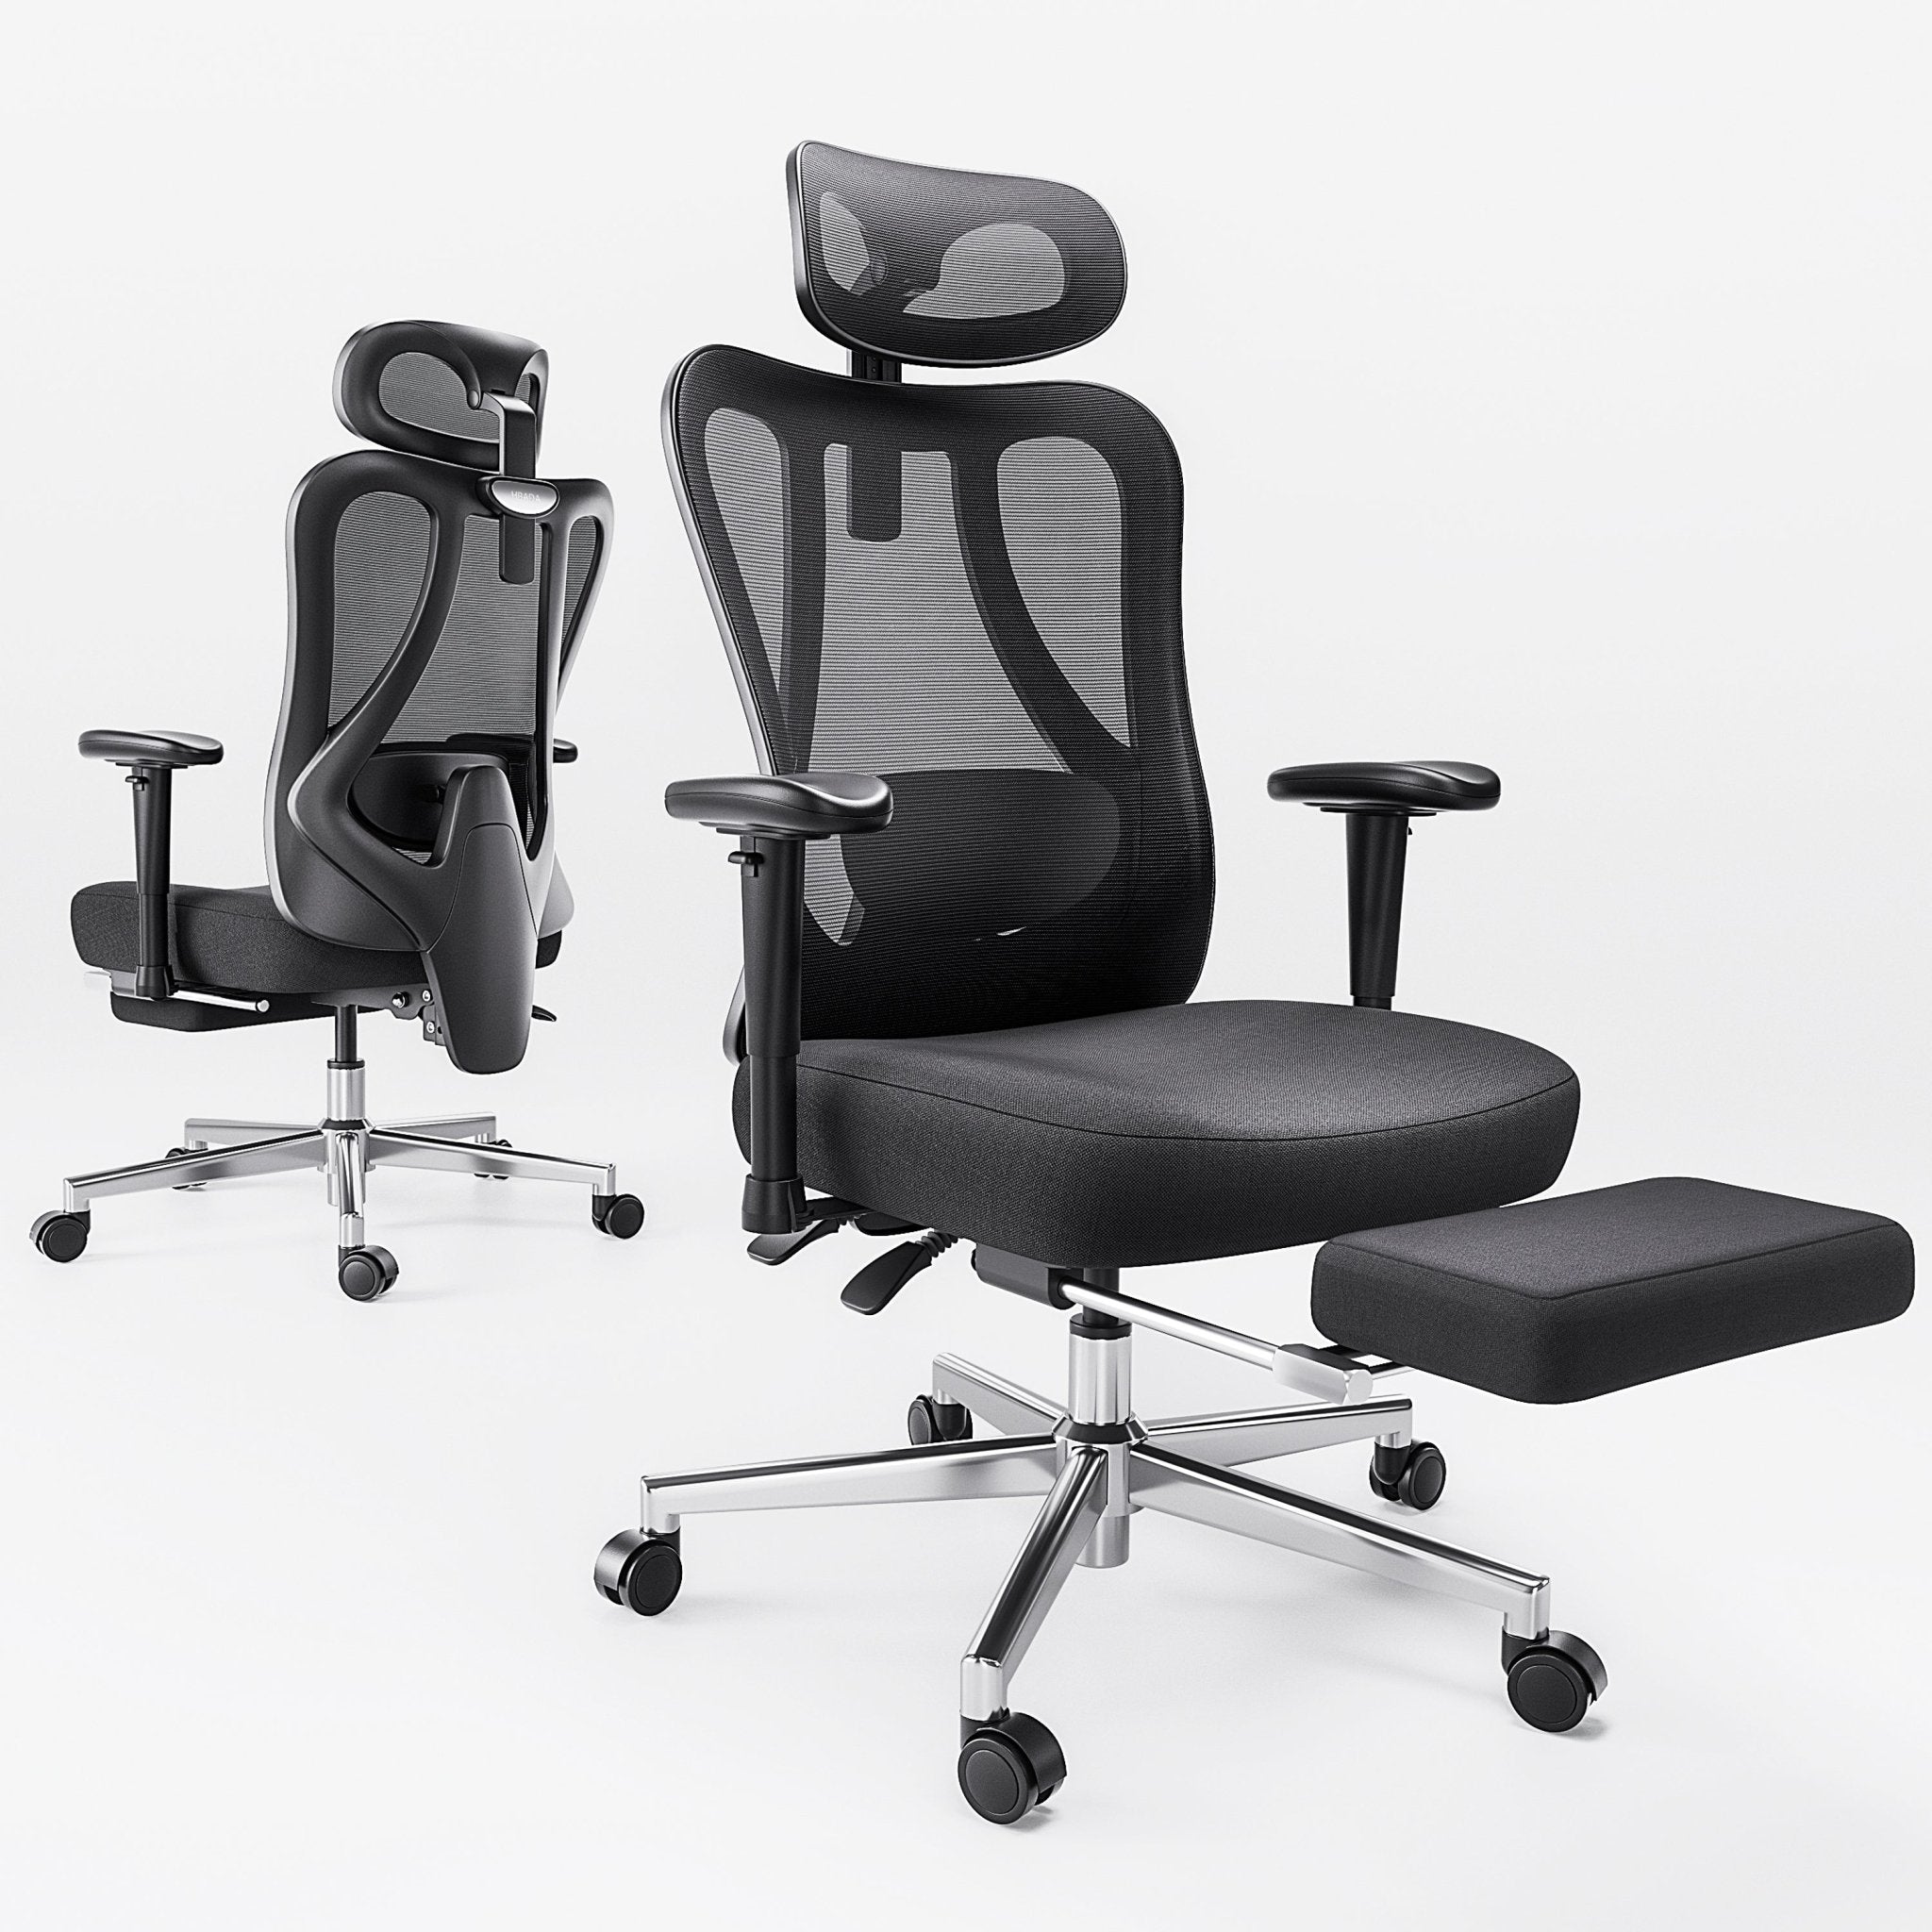 Ergonomic office chair Mod IOO by Herpesa